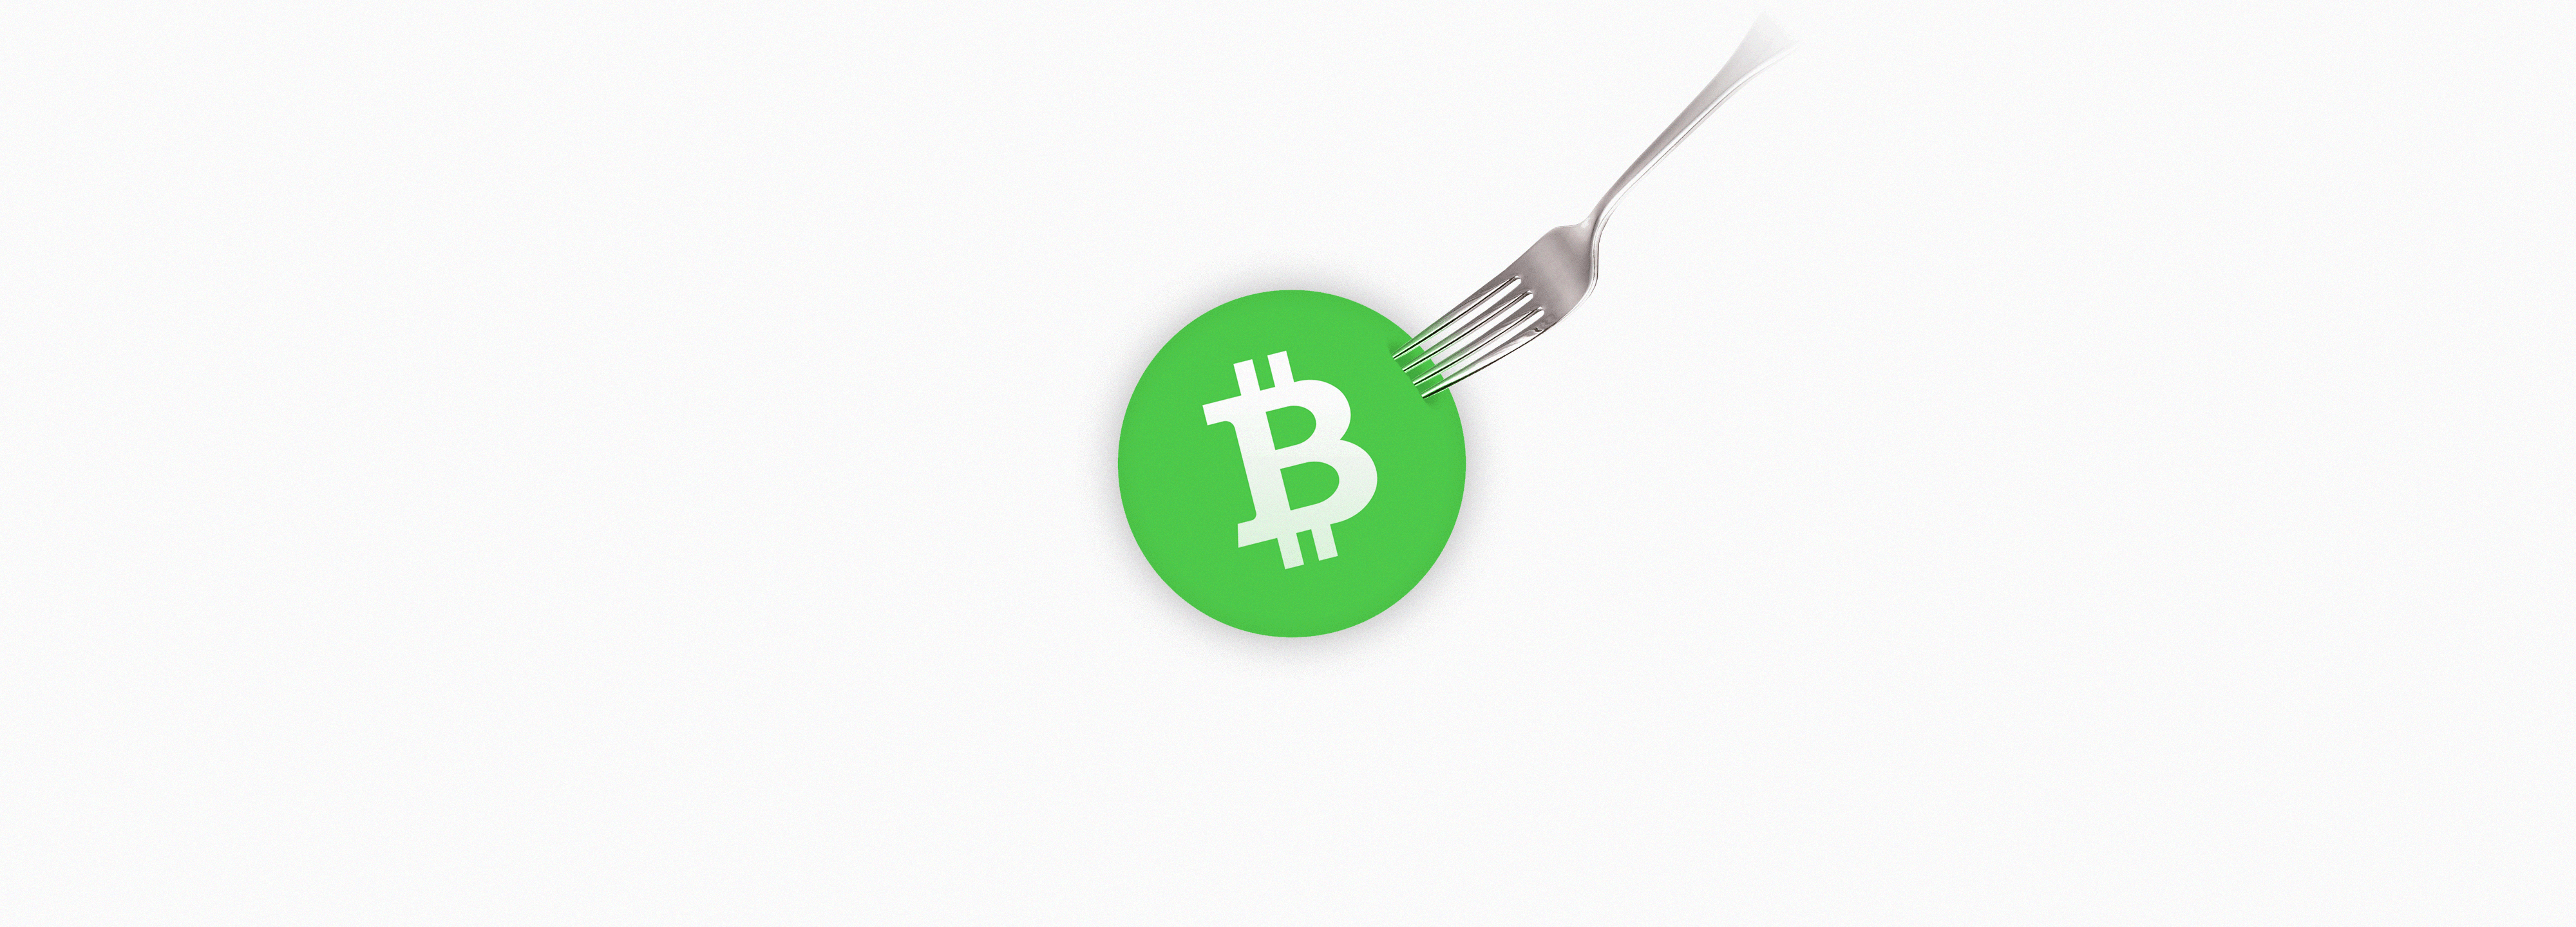 should i buy bitcoin cash before fork